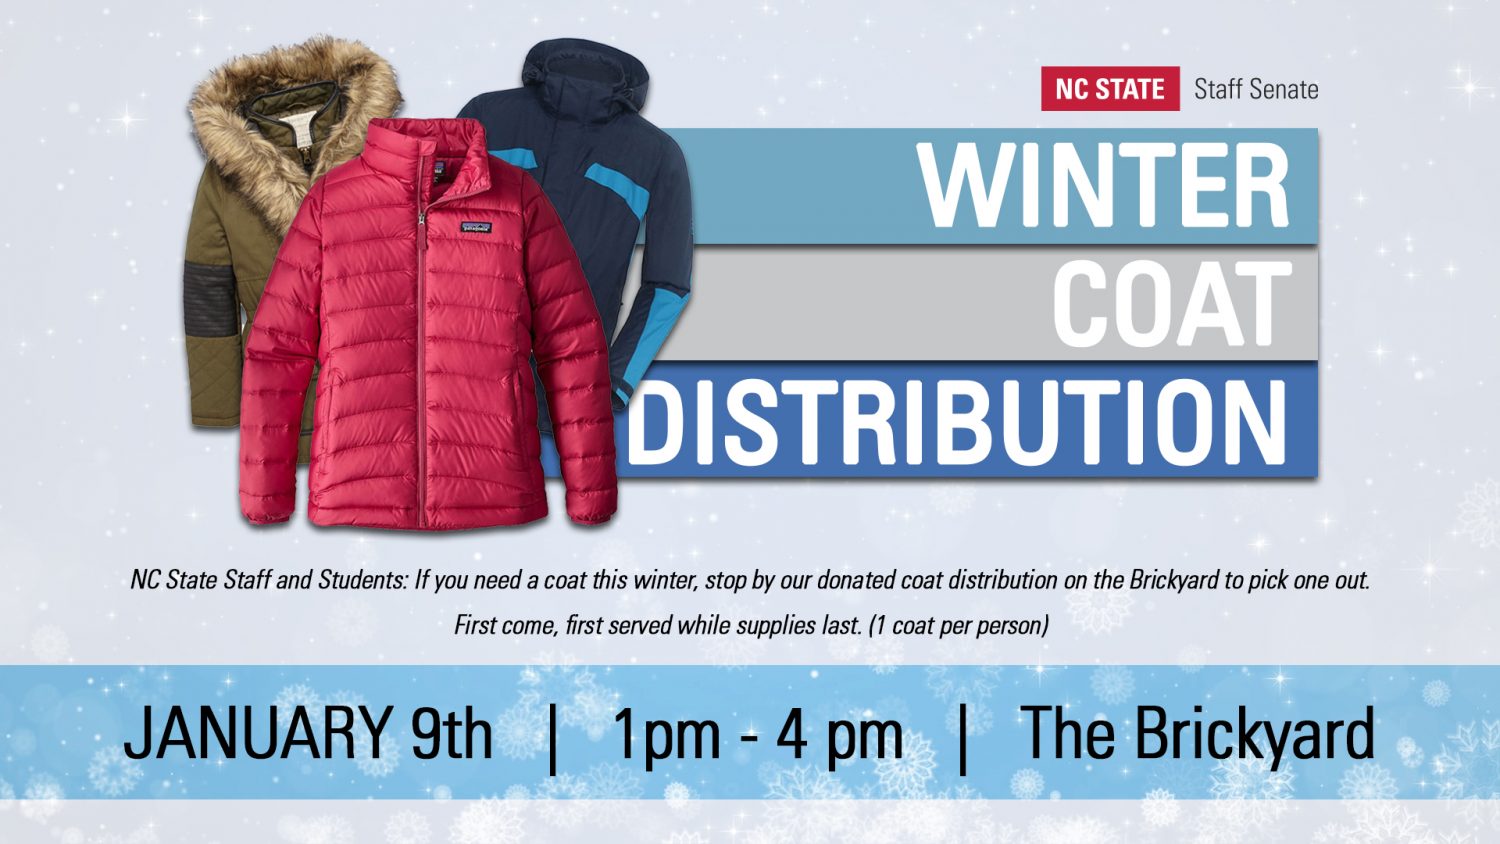 Winter coat distribution on the Brickyard 1/9/2019 1-4 p.m.